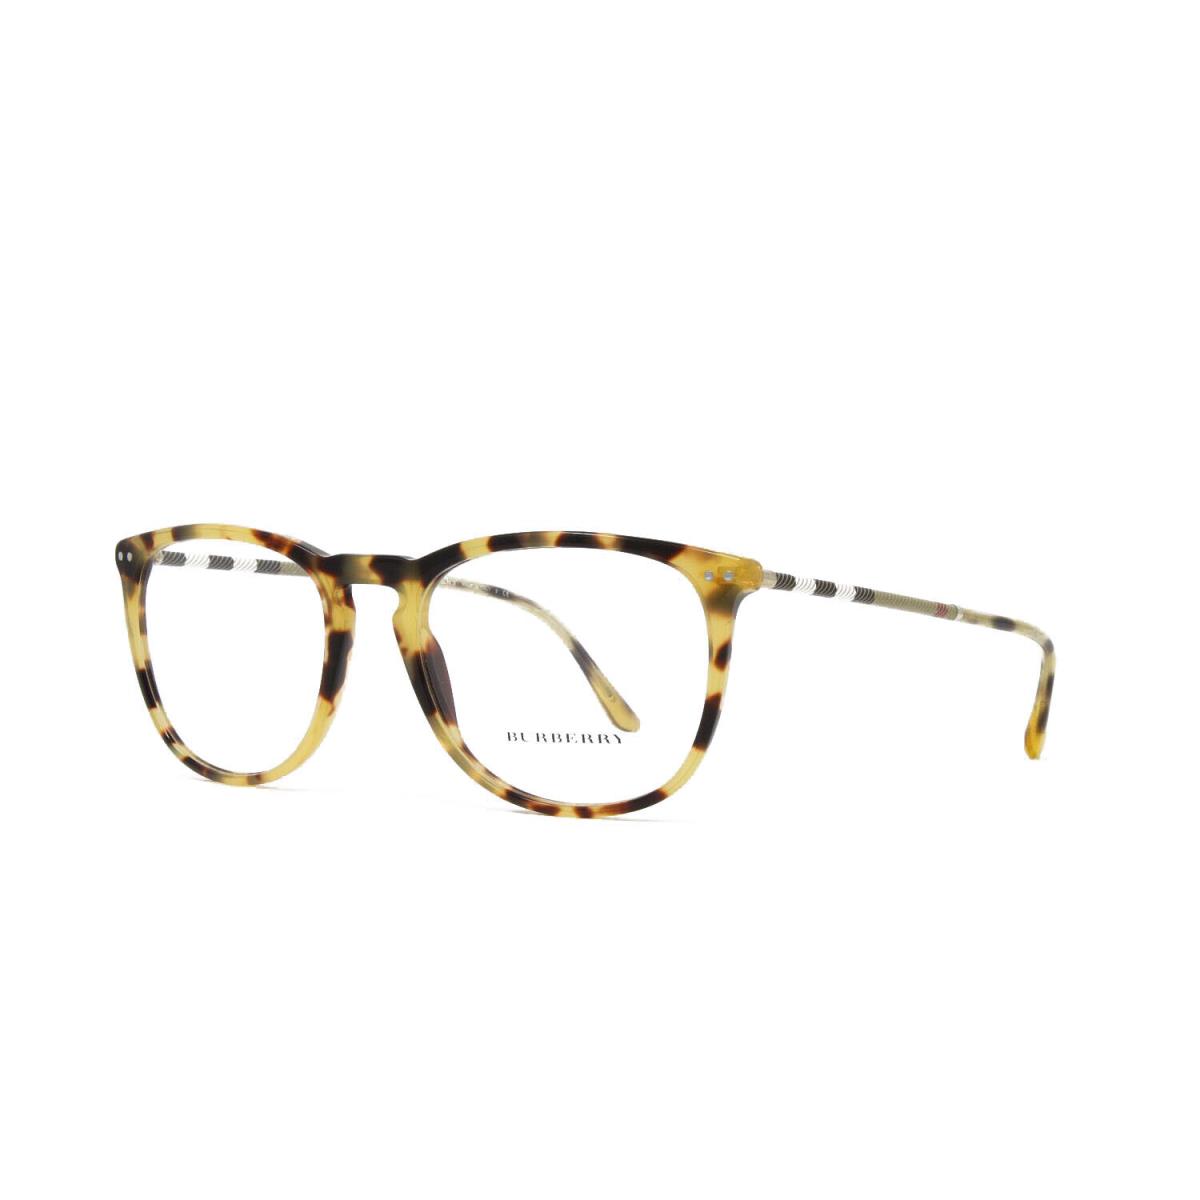 Burberry Men`s Eyeglasses BE2258Q Color 3278 Light Havana Demo Lens 55mm - Brown Frame